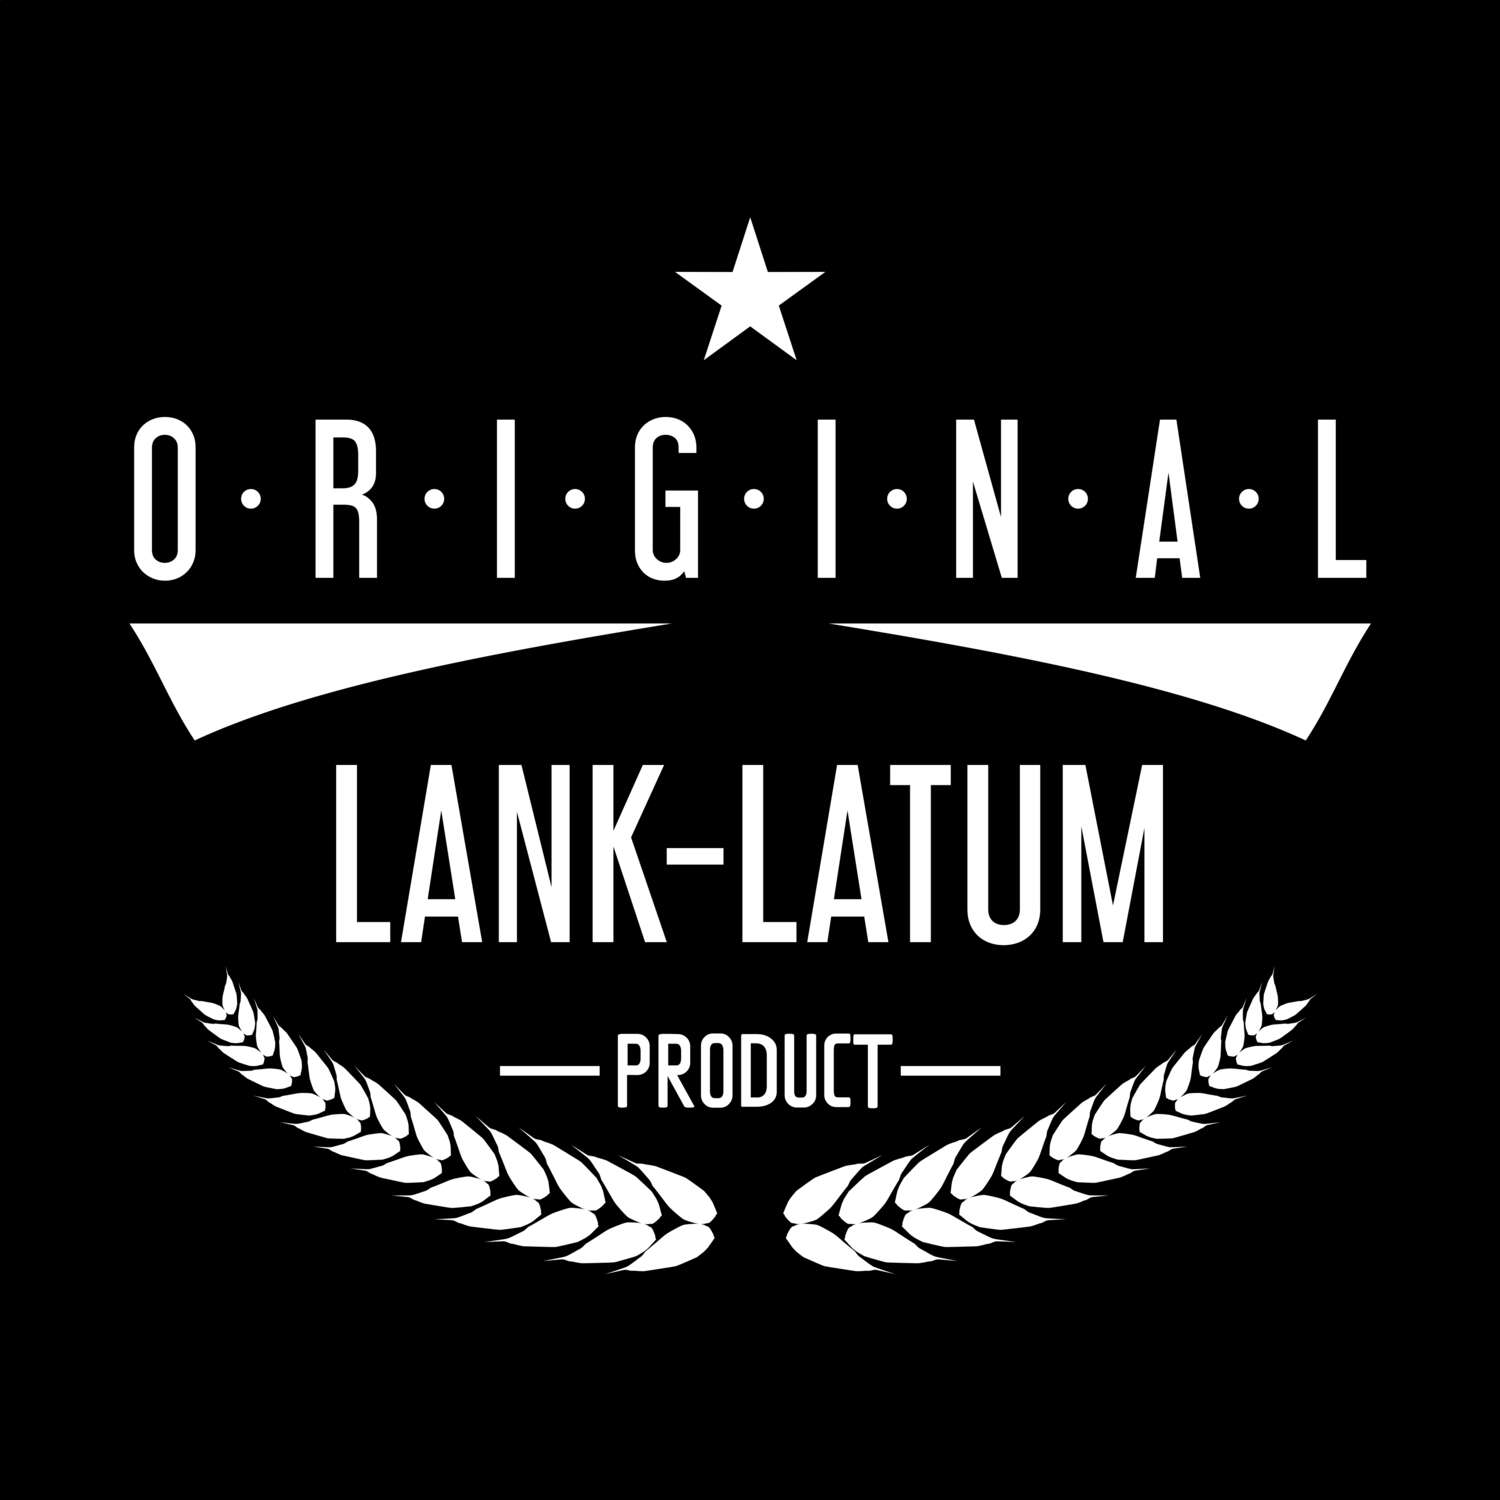 Lank-Latum T-Shirt »Original Product«